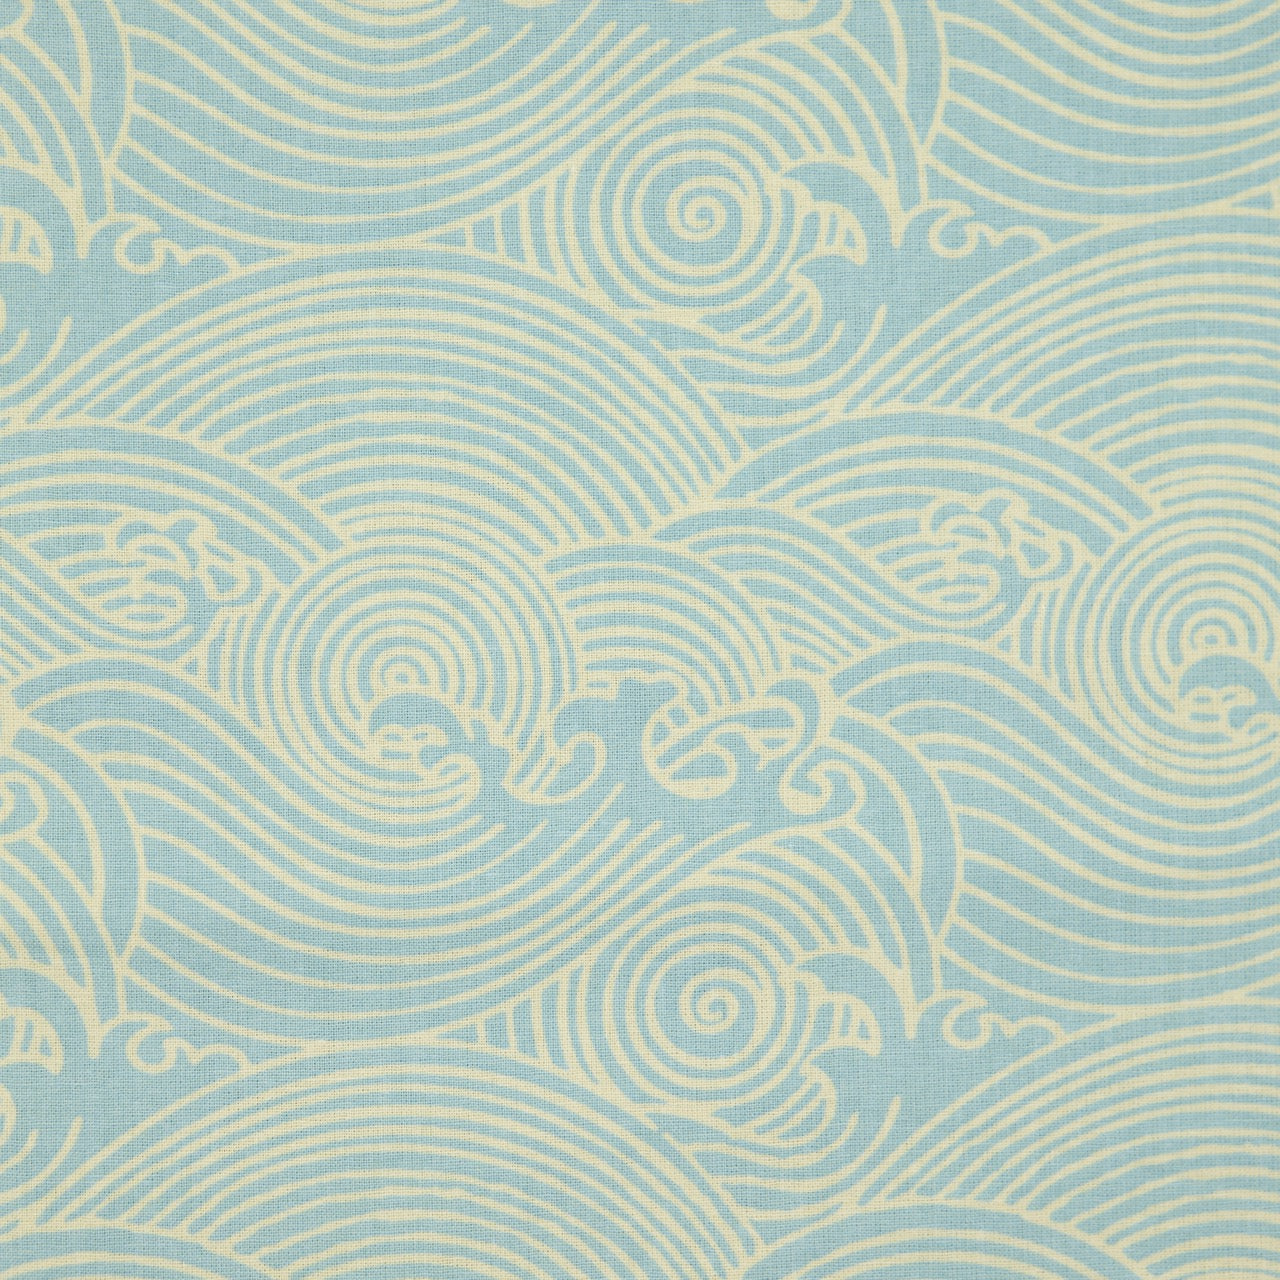 Quilting Cotton - Floral - Spiral Wave (detail)